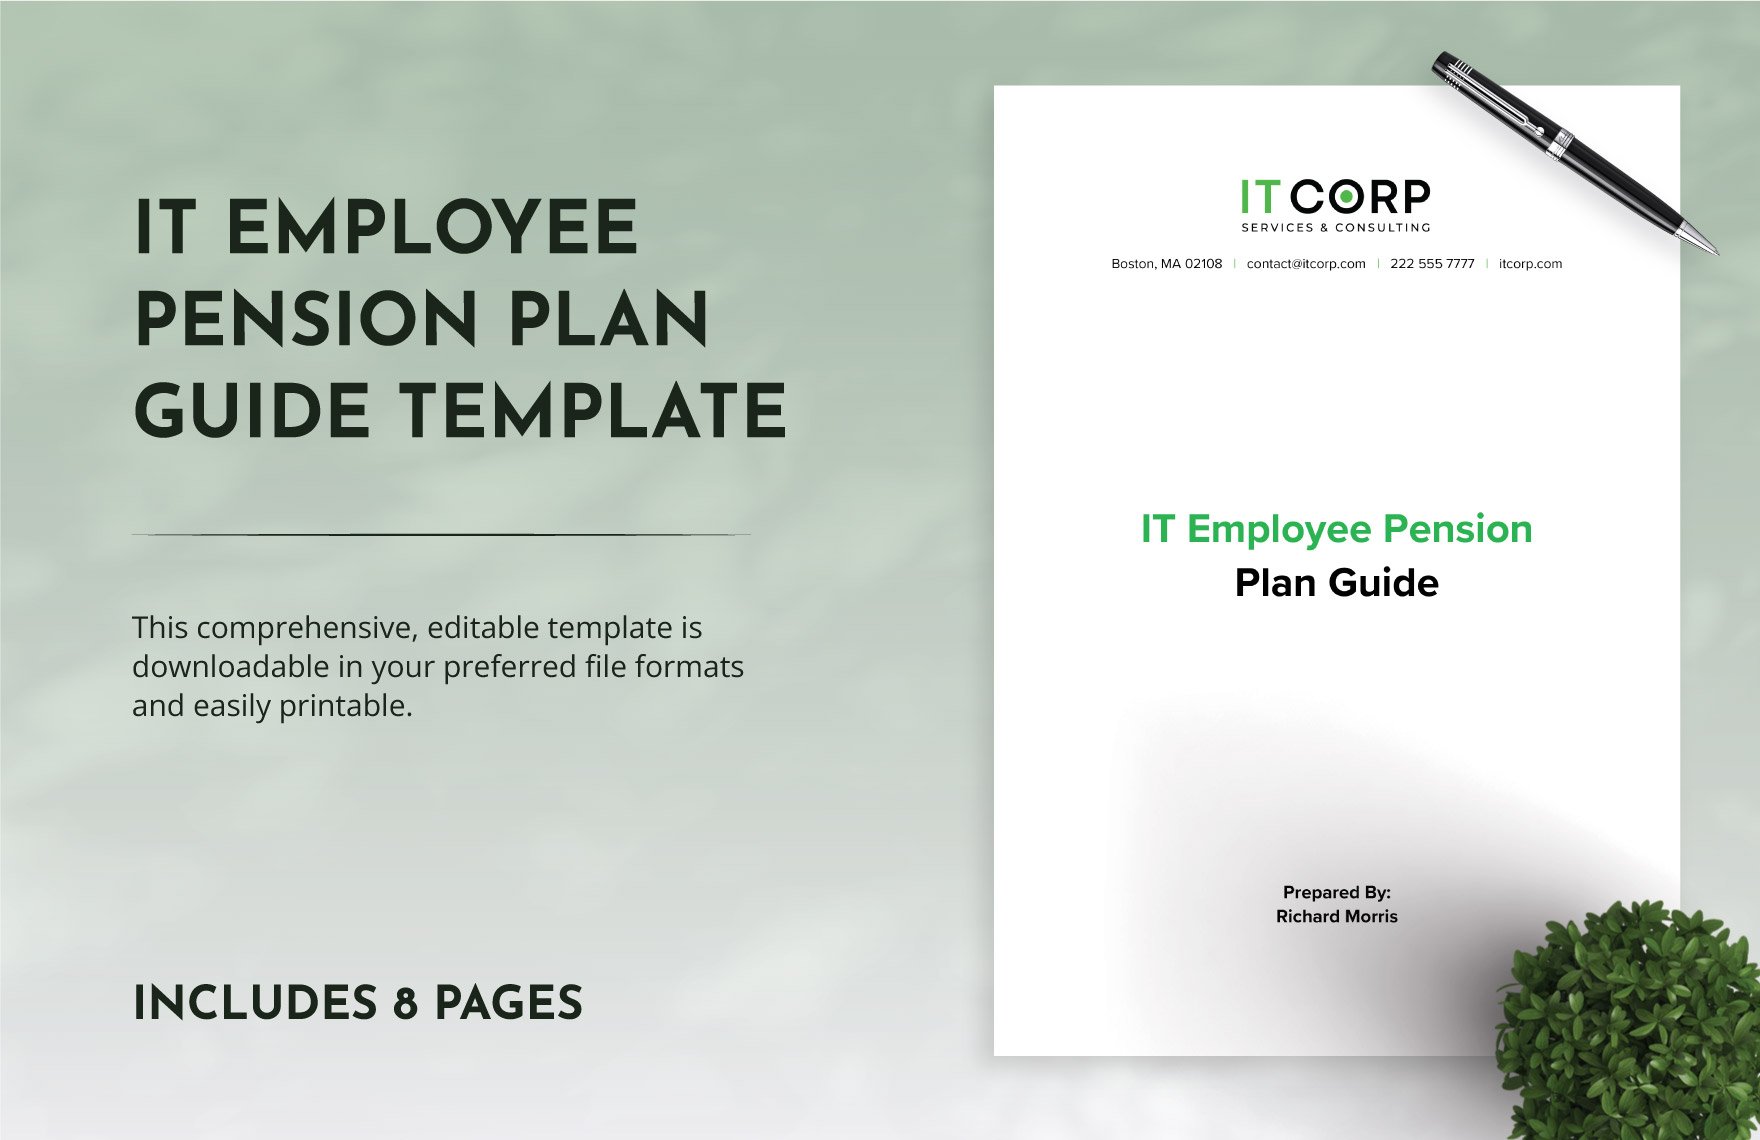 IT Employee Pension Plan Guide Template